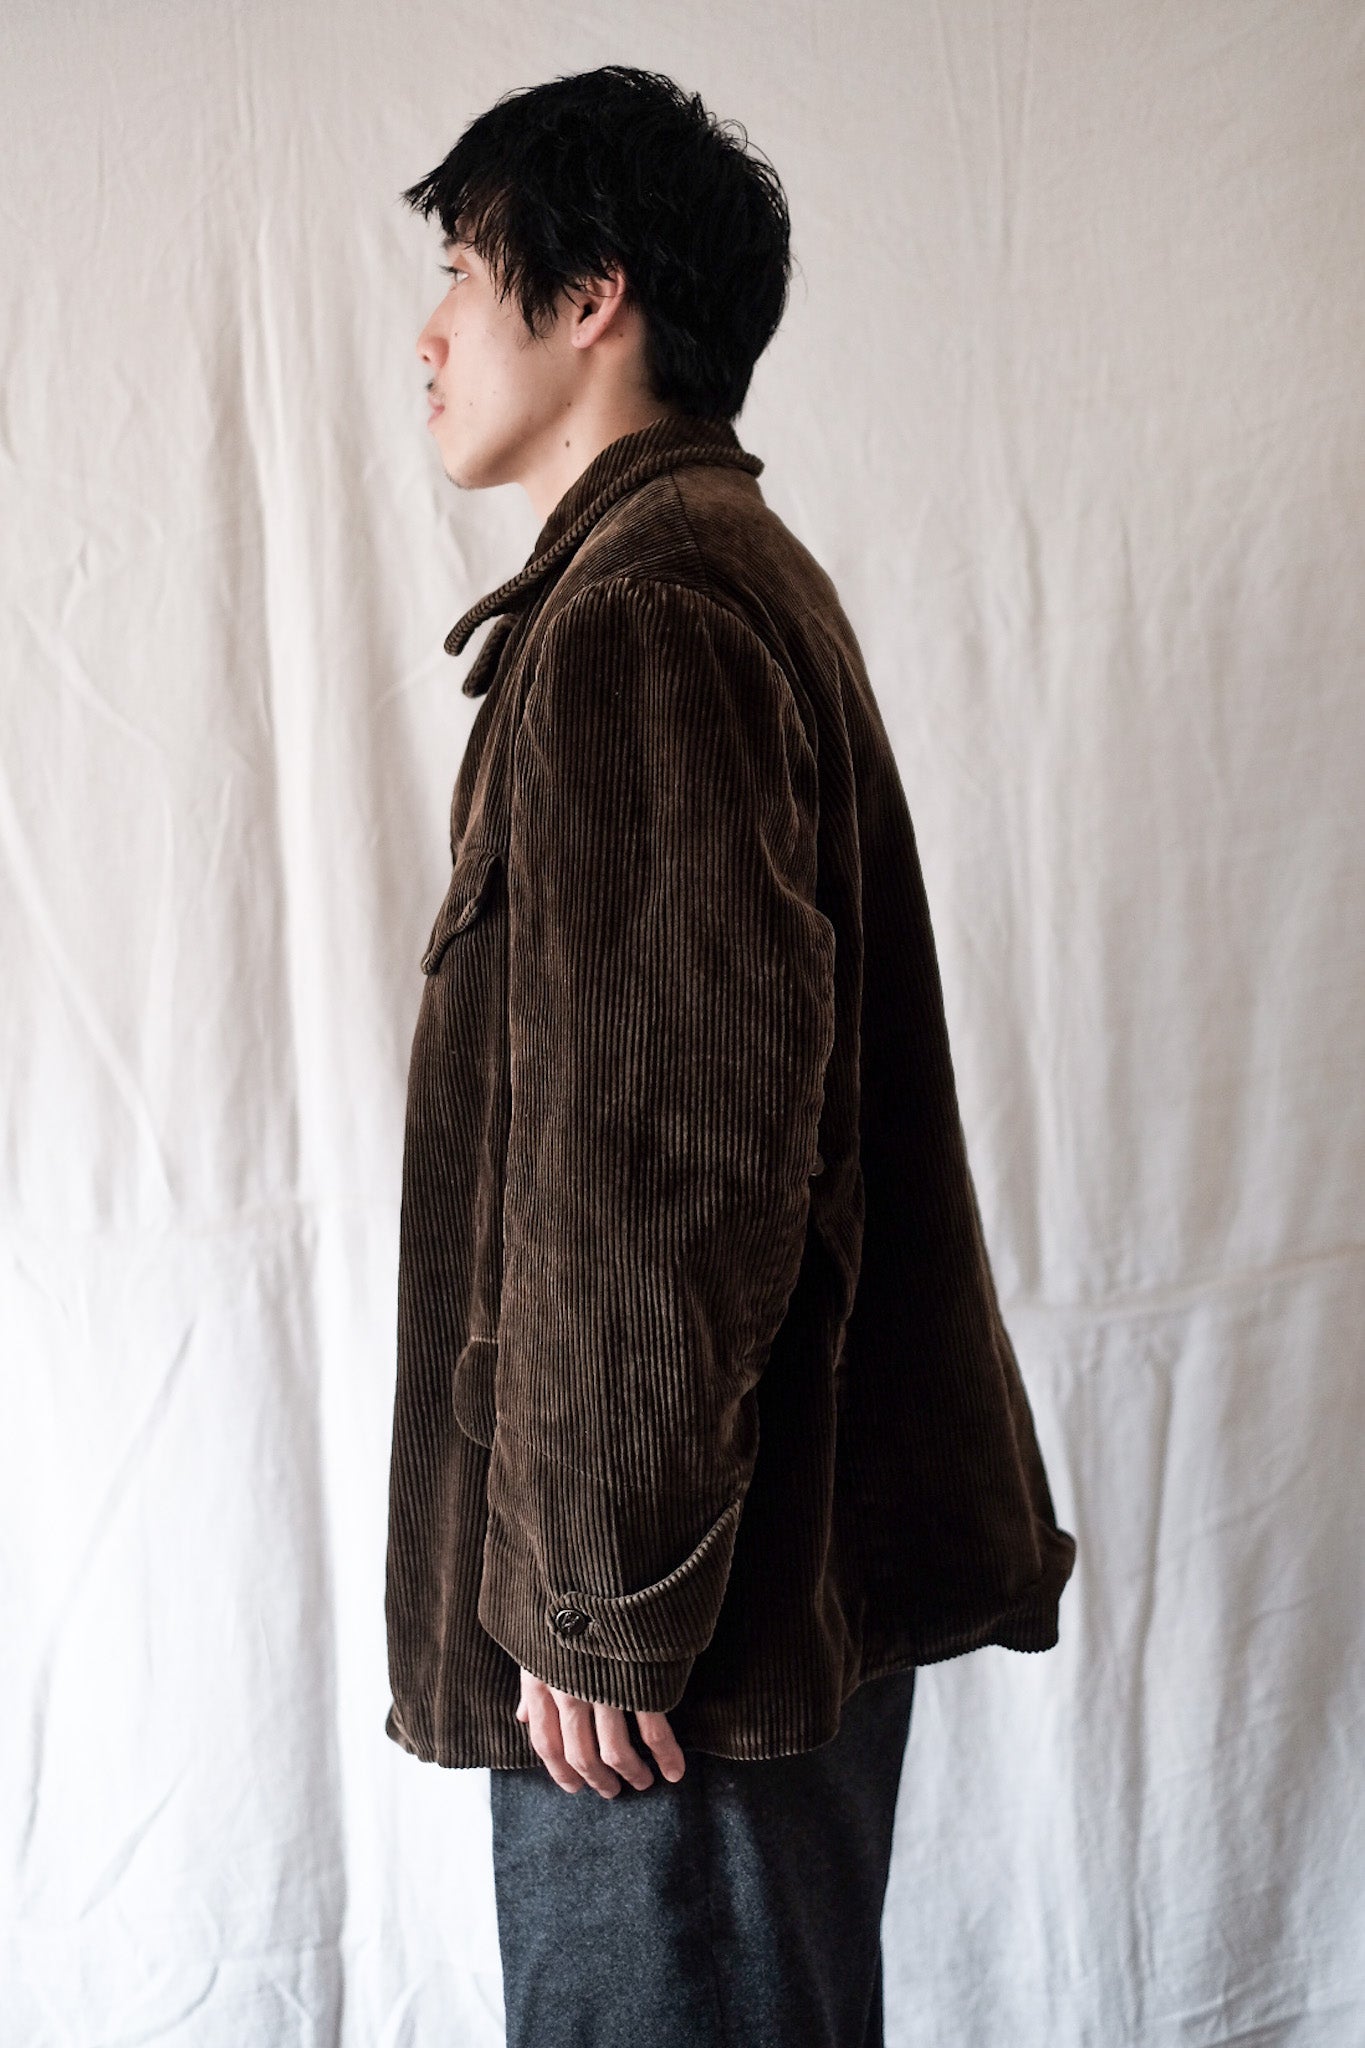 [~ 30's] French Vintage Brown Corduroy Hunting Jacket